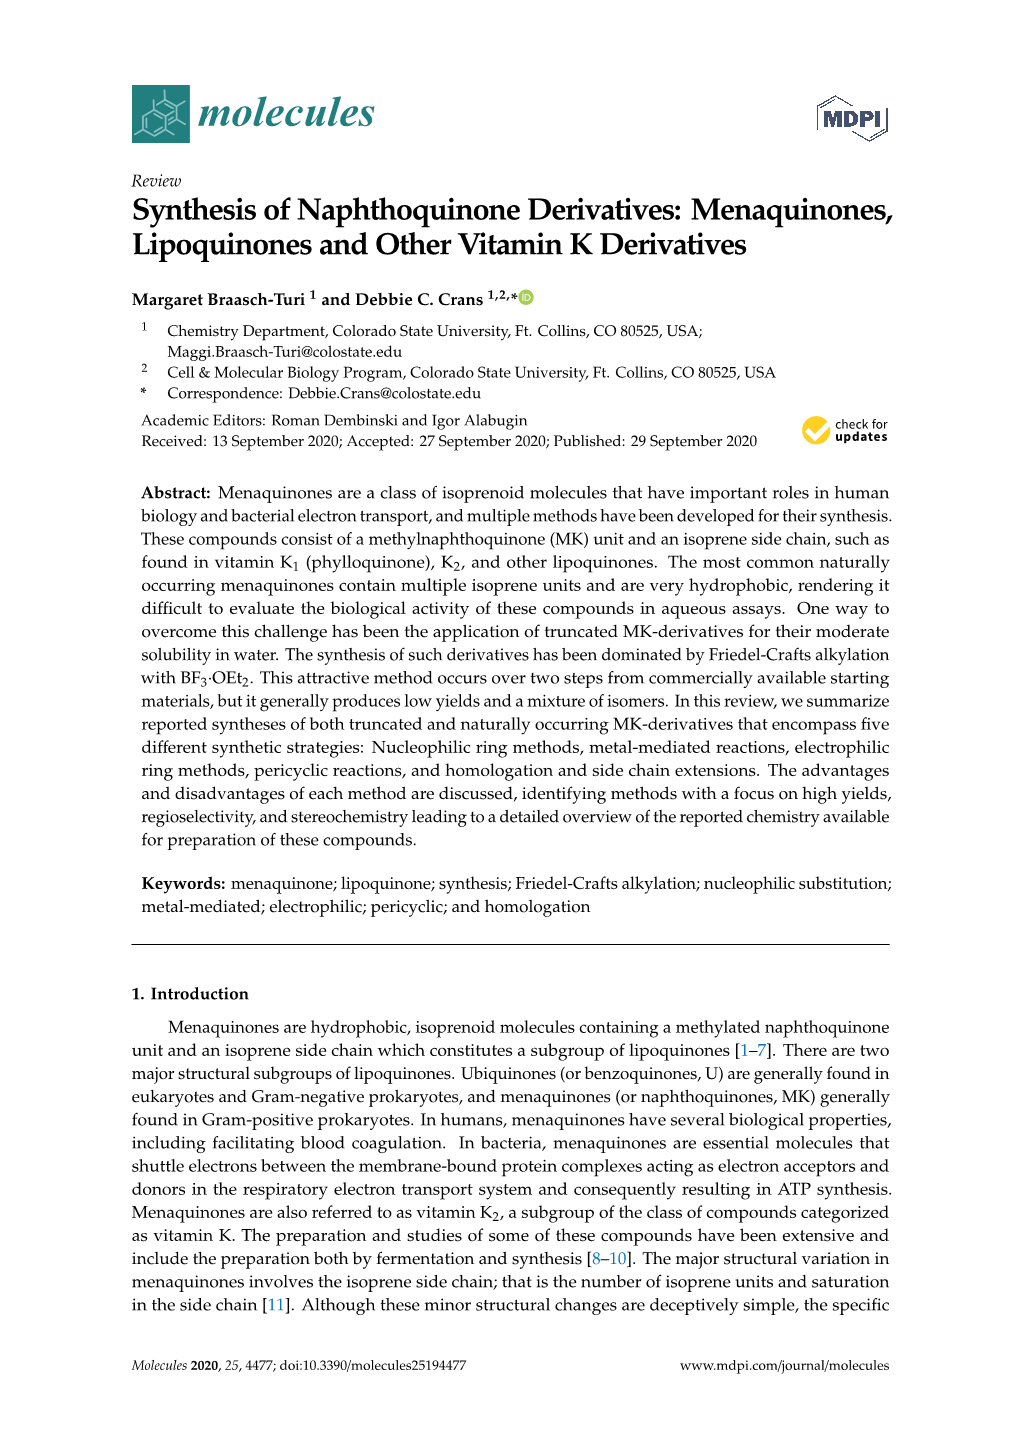 Menaquinones, Lipoquinones and Other Vitamin K Derivatives